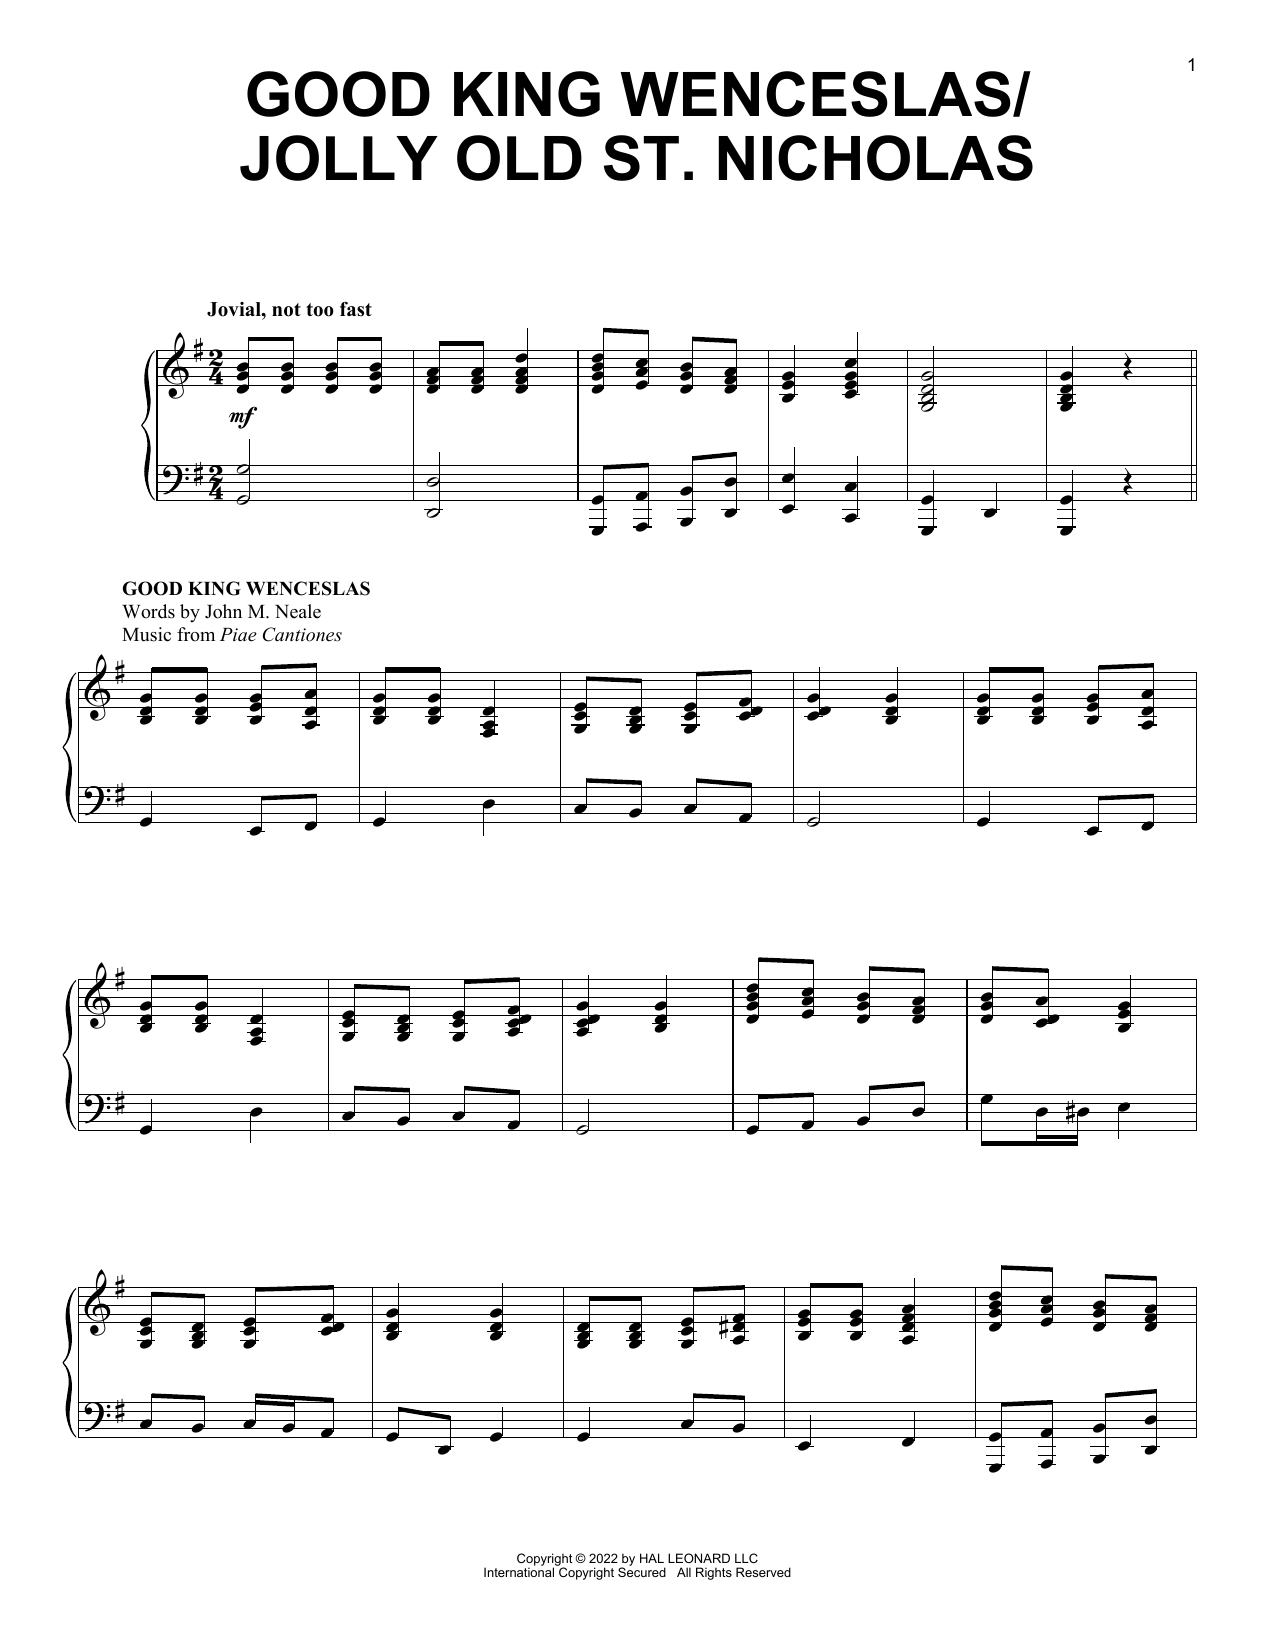 Various Good King Wenceslas/Jolly Old Saint Nicholas Sheet Music Notes & Chords for Easy Guitar Tab - Download or Print PDF